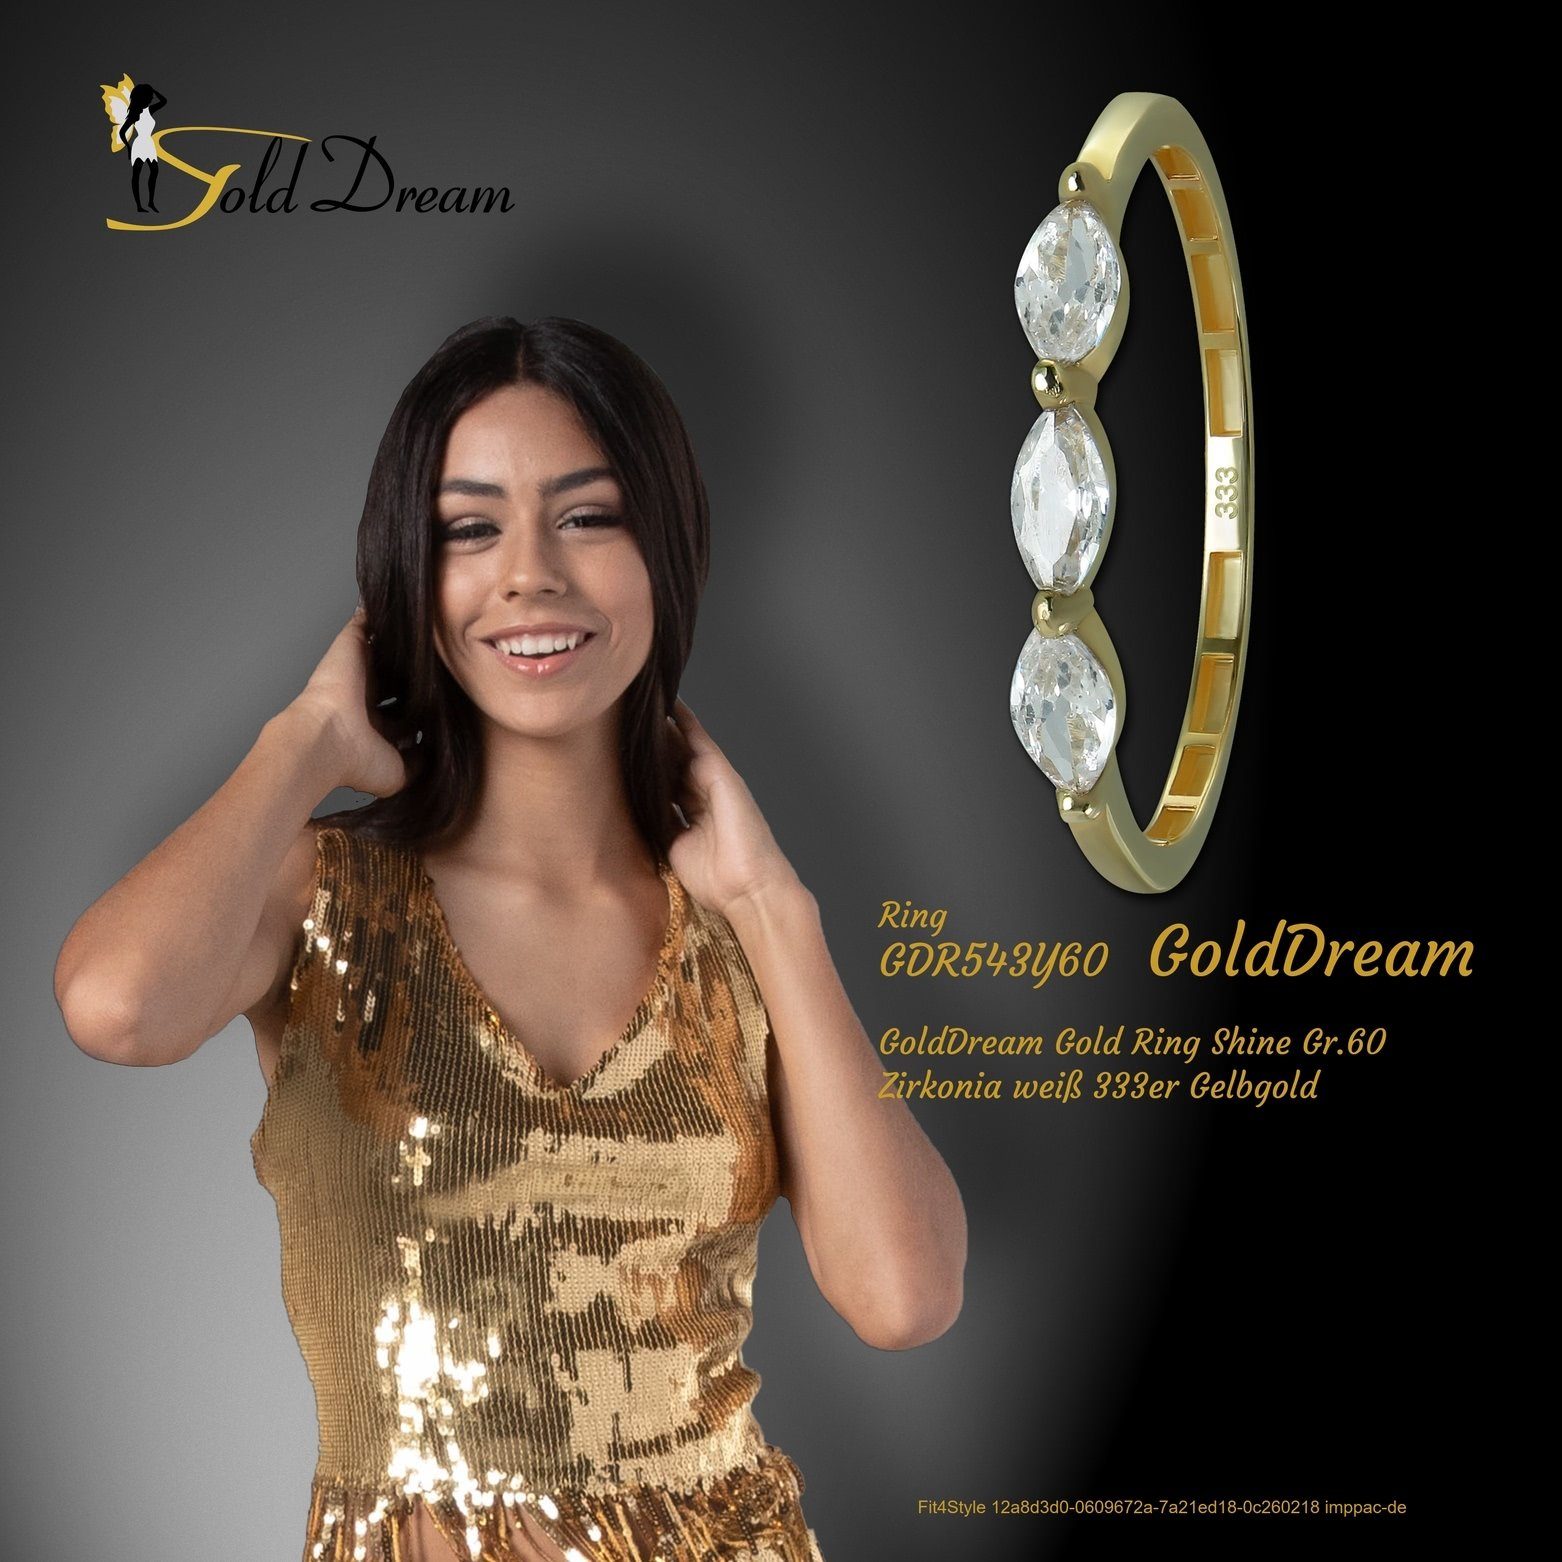 8 Gold Shine (Fingerring), Damen Shine gold, Karat, weiß Goldring Gr.60 Gelbgold 333 GoldDream GoldDream Ring - Ring Zirkonia Farbe: